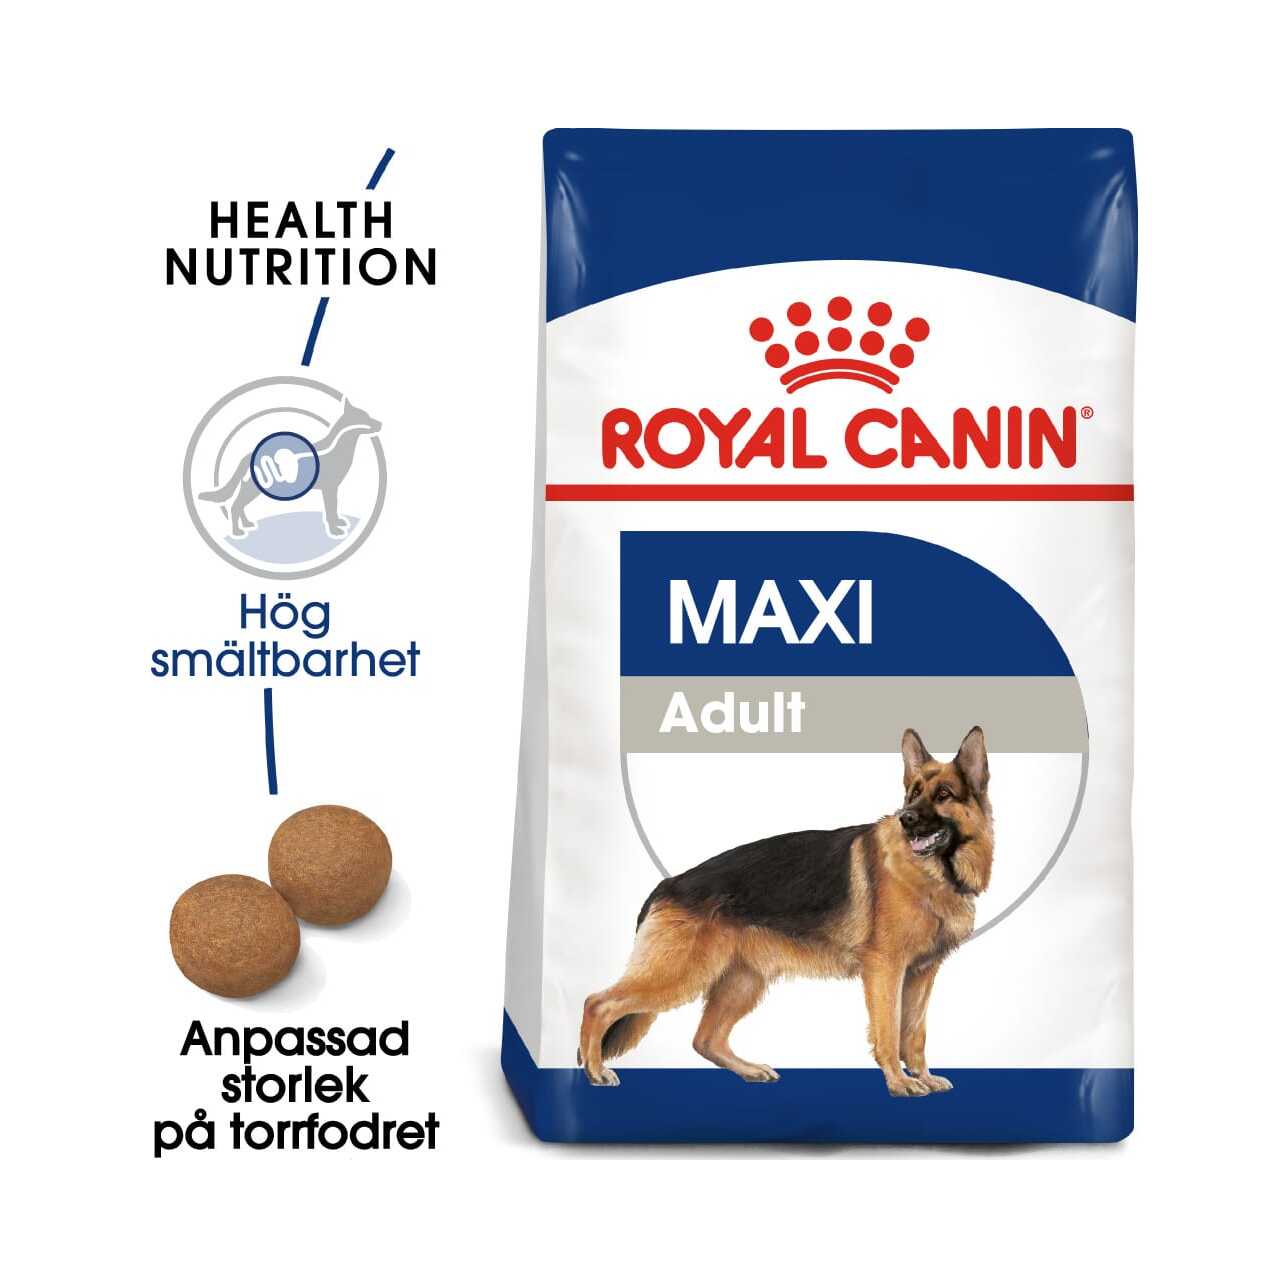 Buy Royal Canin Maxi Adult your dog | Tinybuddy